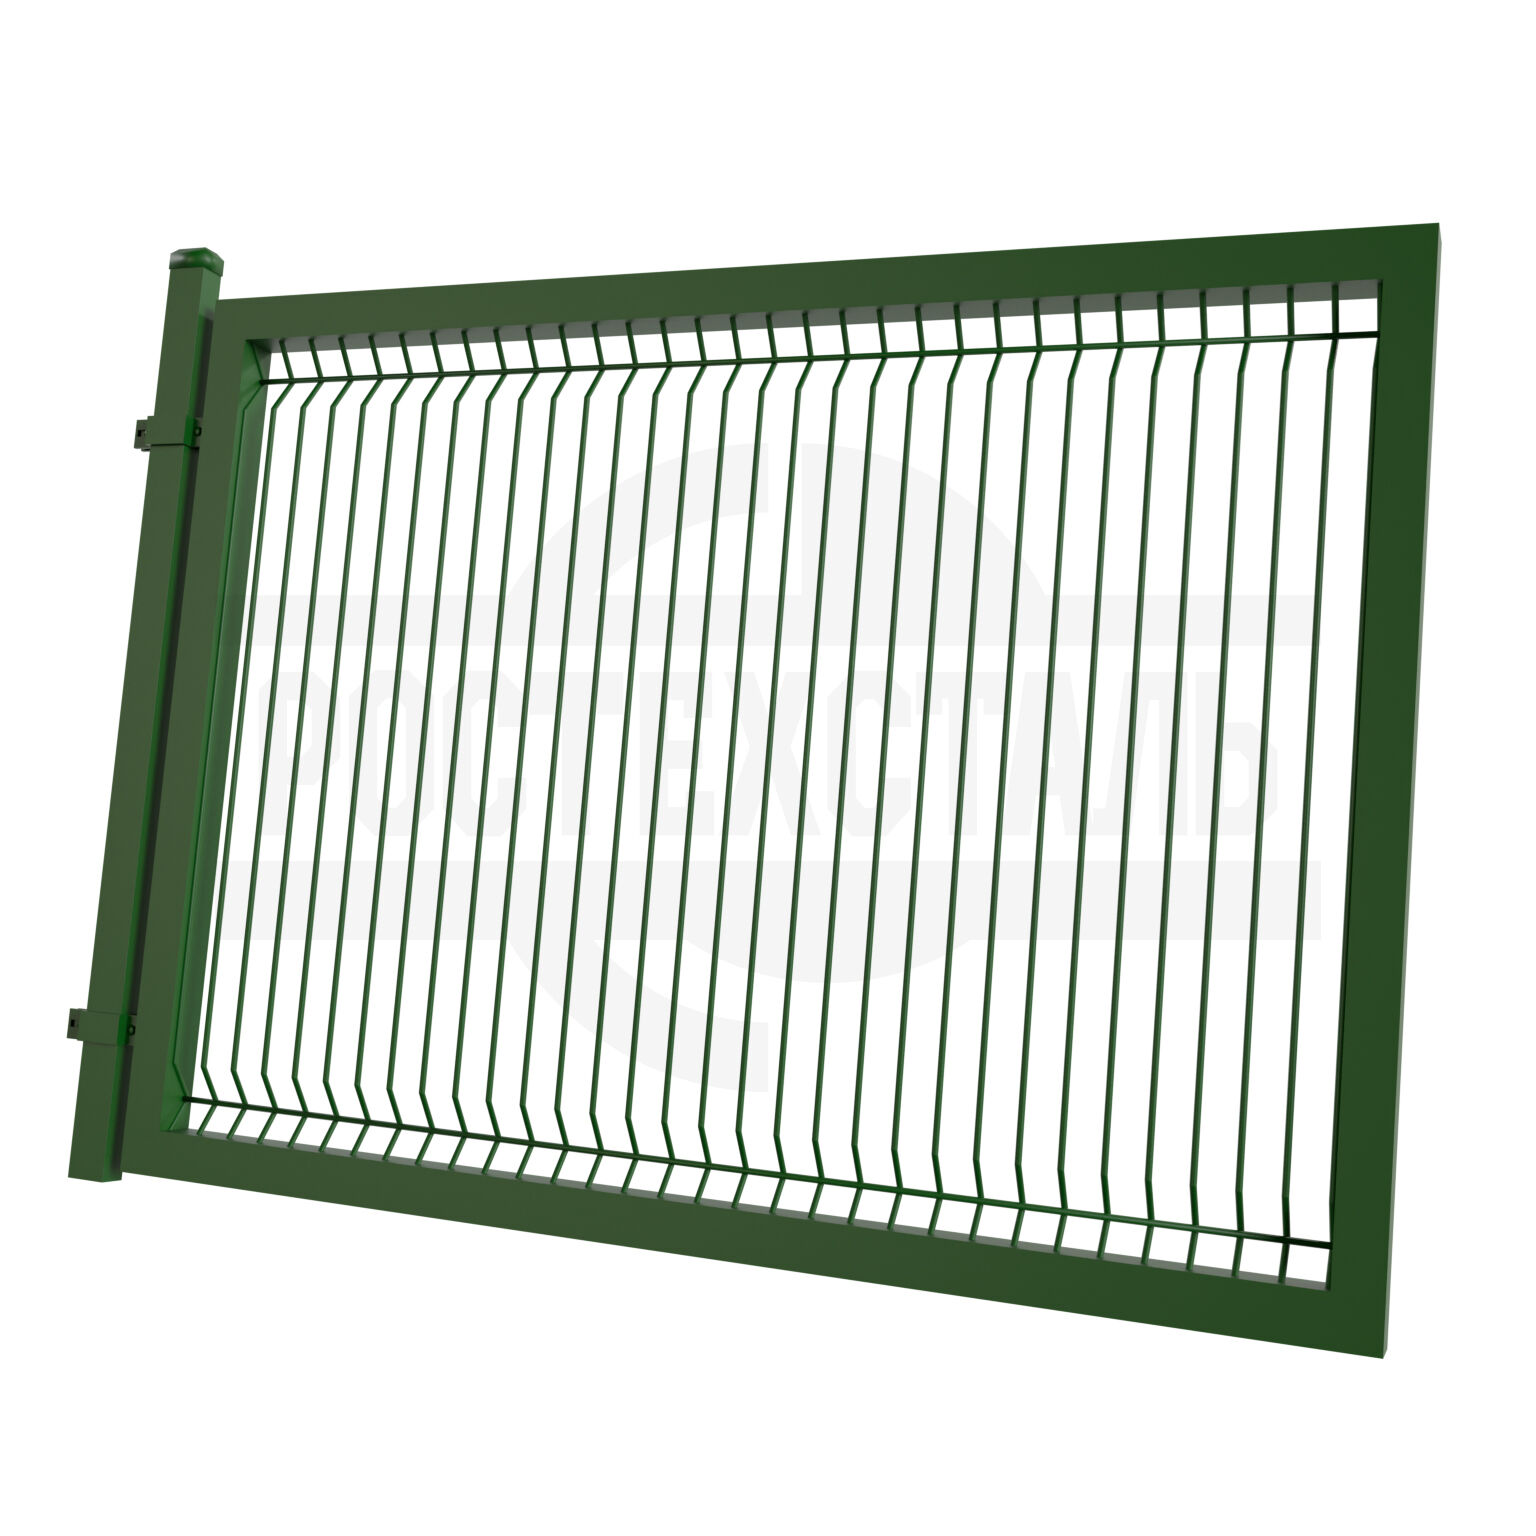 Ворота для 3D забора откатные зеленые (RAL 6005) 1500х6000 мм